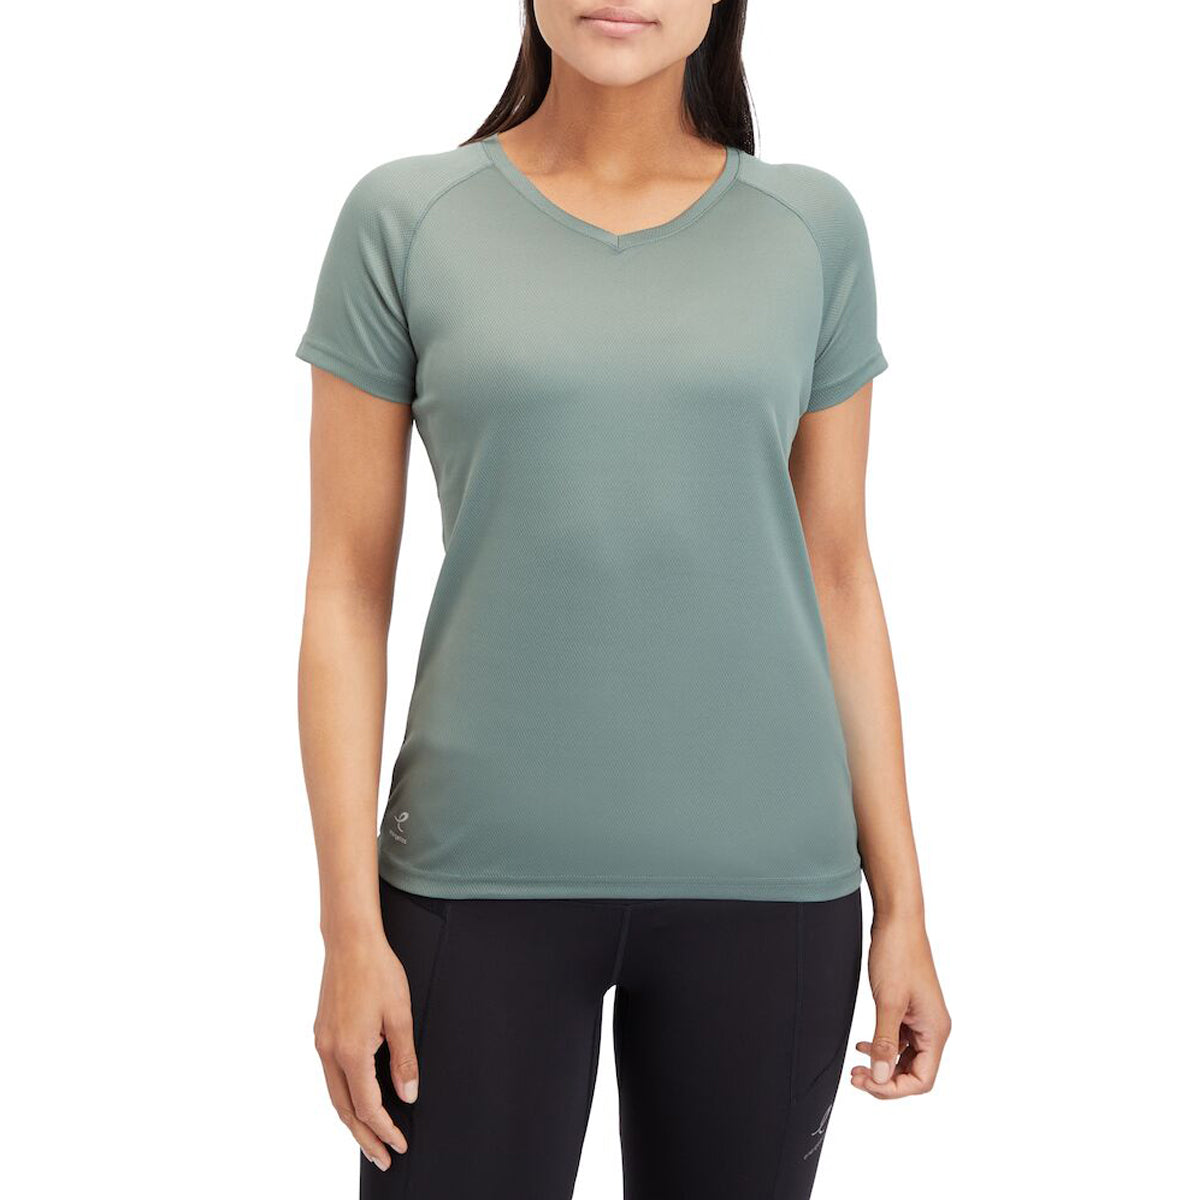 Energetics Natalja Sports T-Shirt For Women, Dark Green